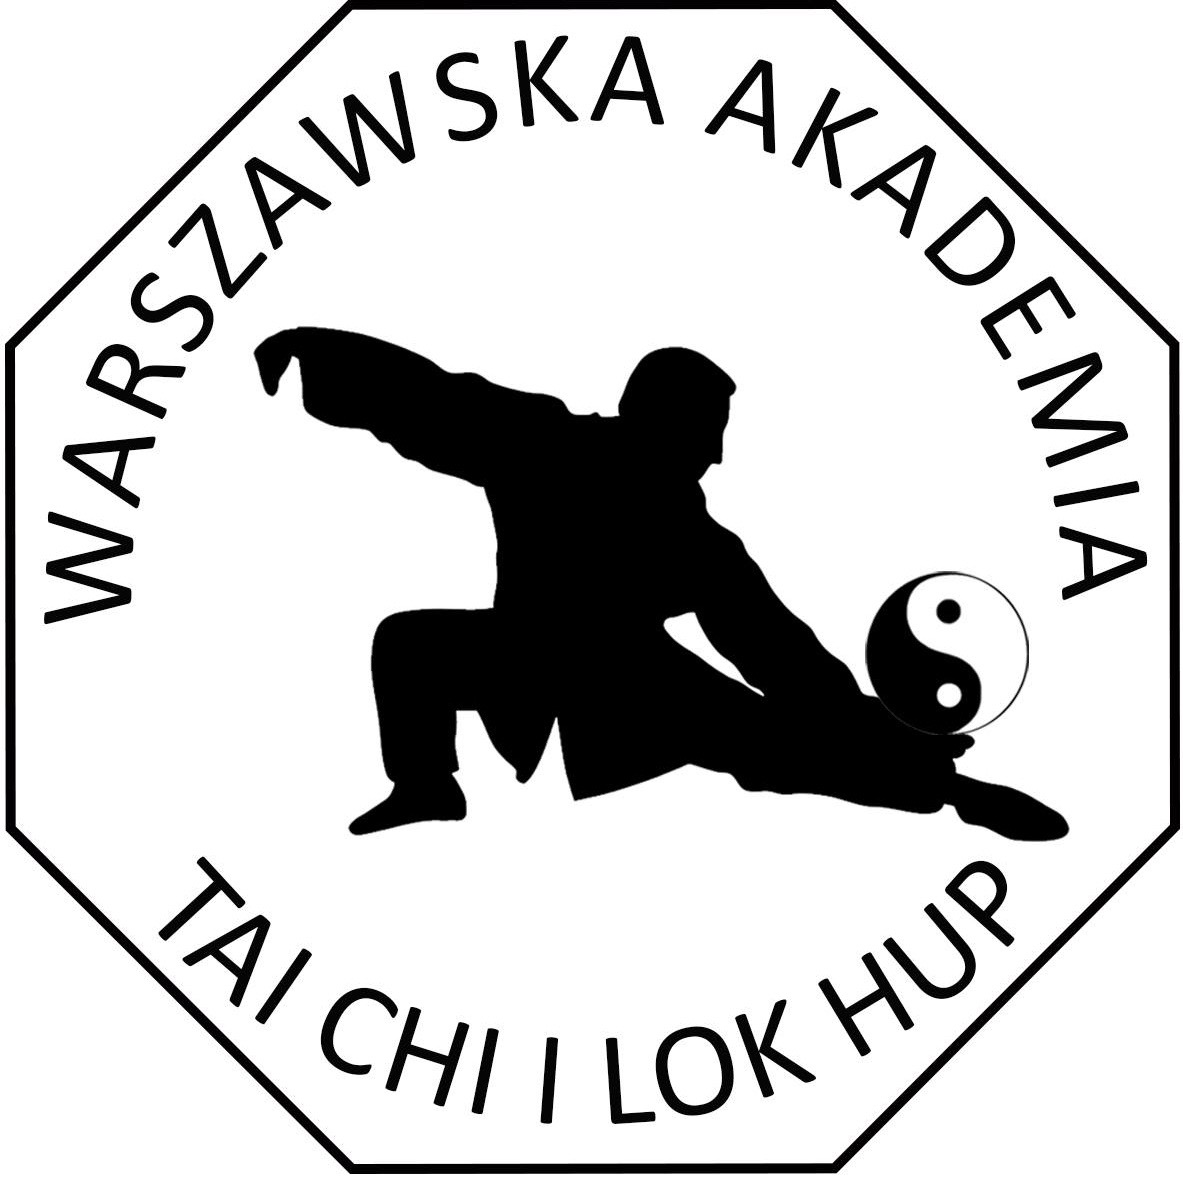 Warsaw logo.jpg